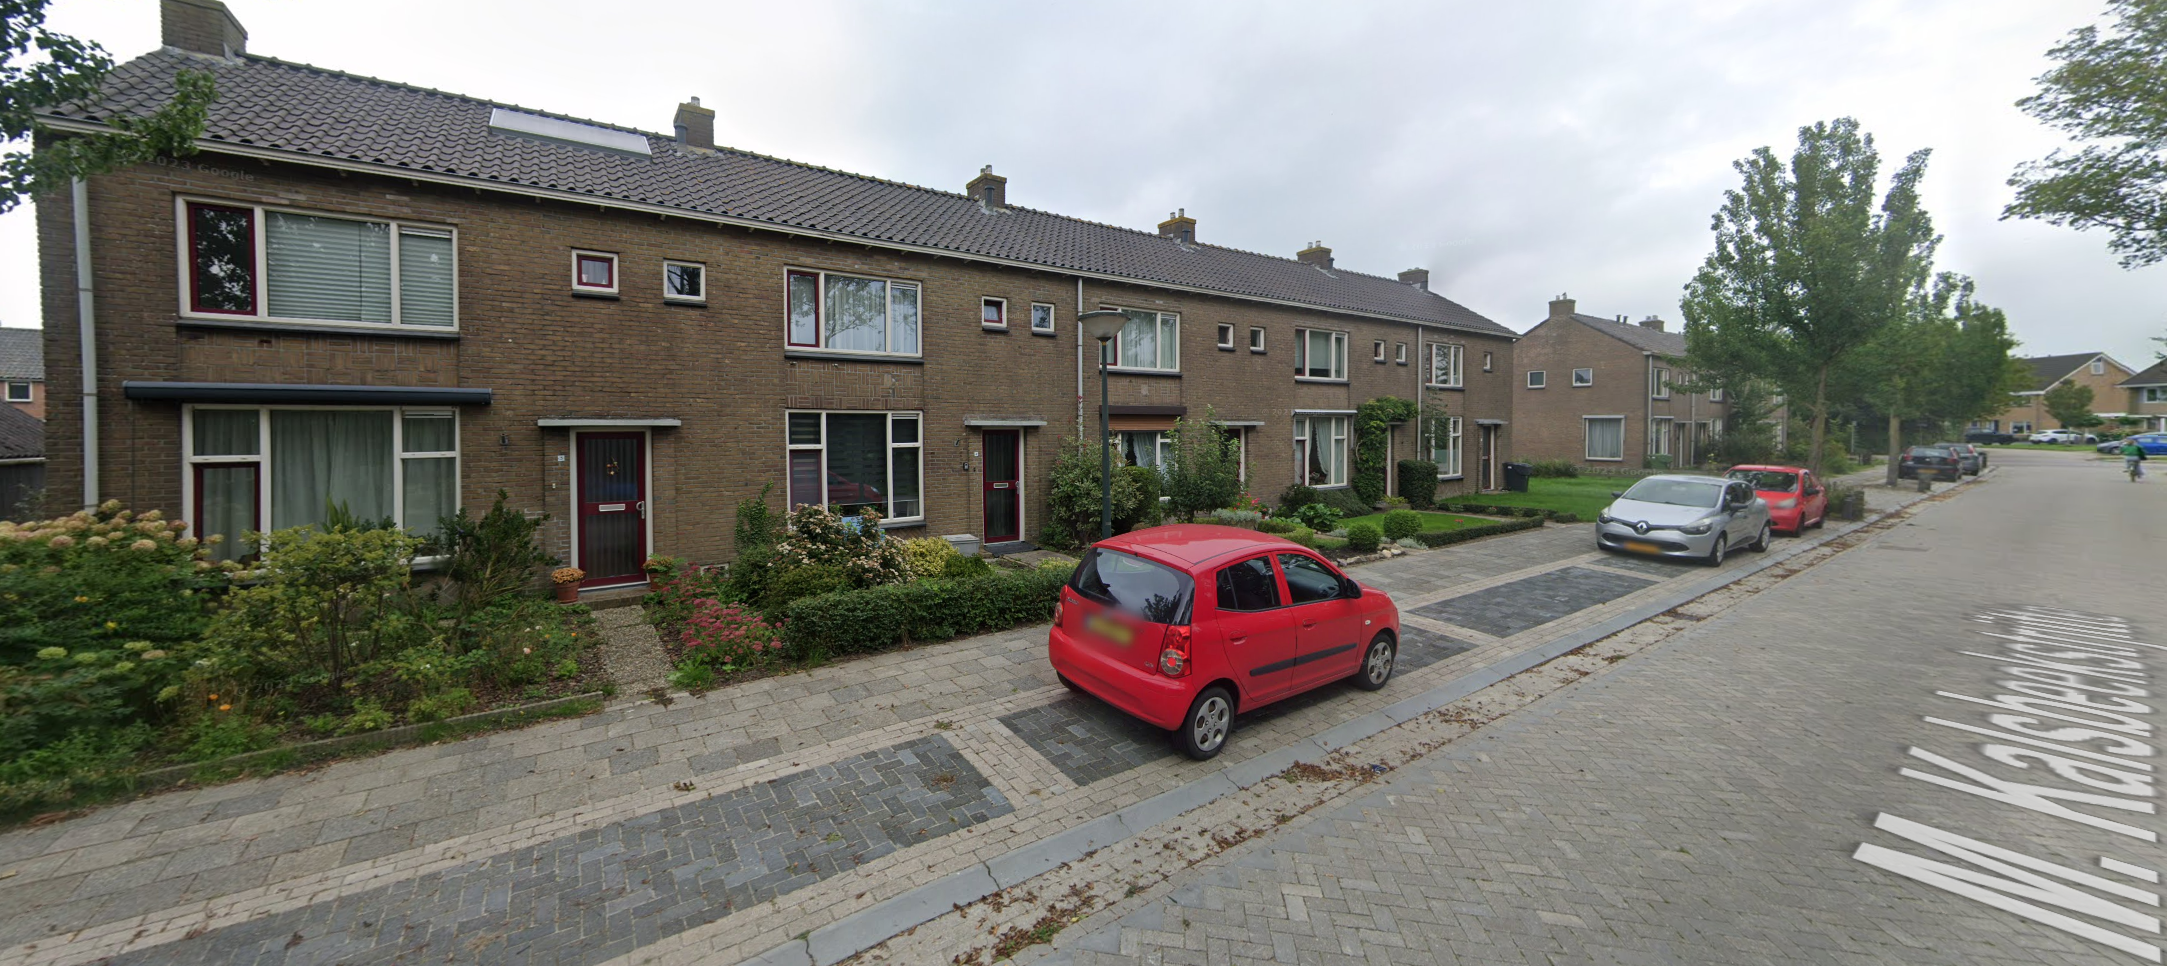 M. Kalsbeekstrjitte 4, 9005 RD Wergea, Nederland